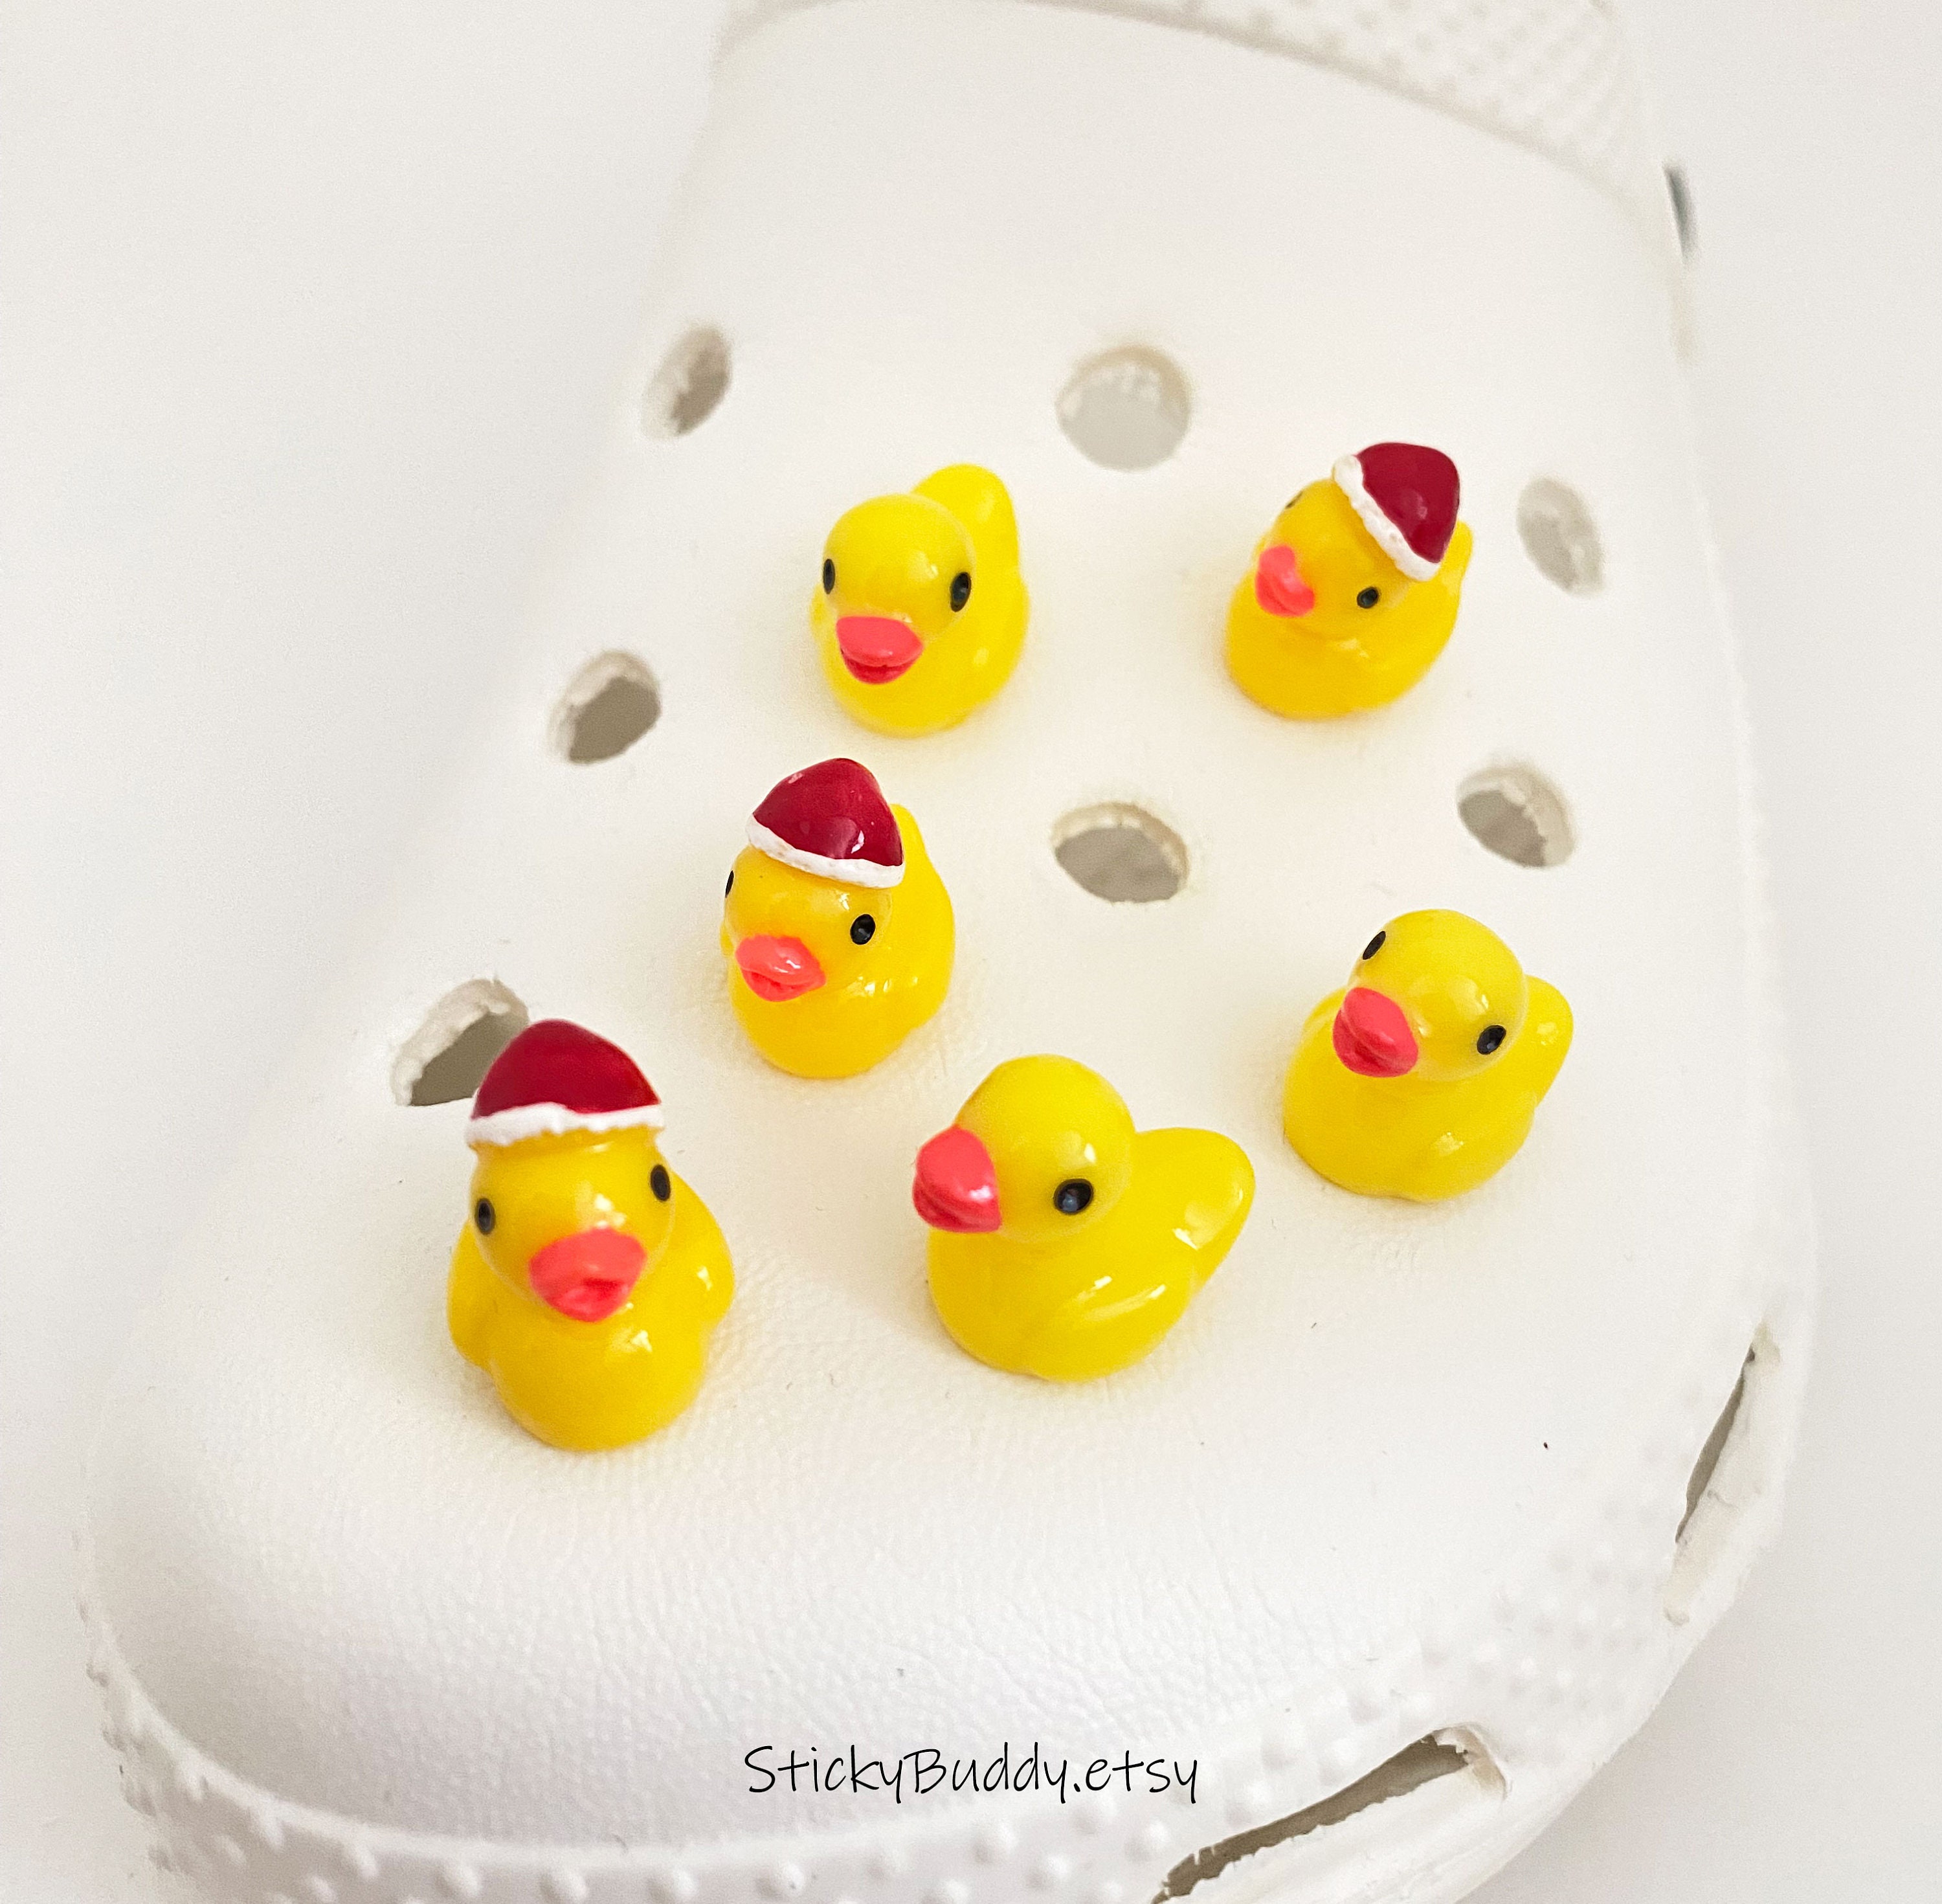 Duck Knife Funny Duck Pins Ducks Gifts Cute Kawaii Enamel Pins